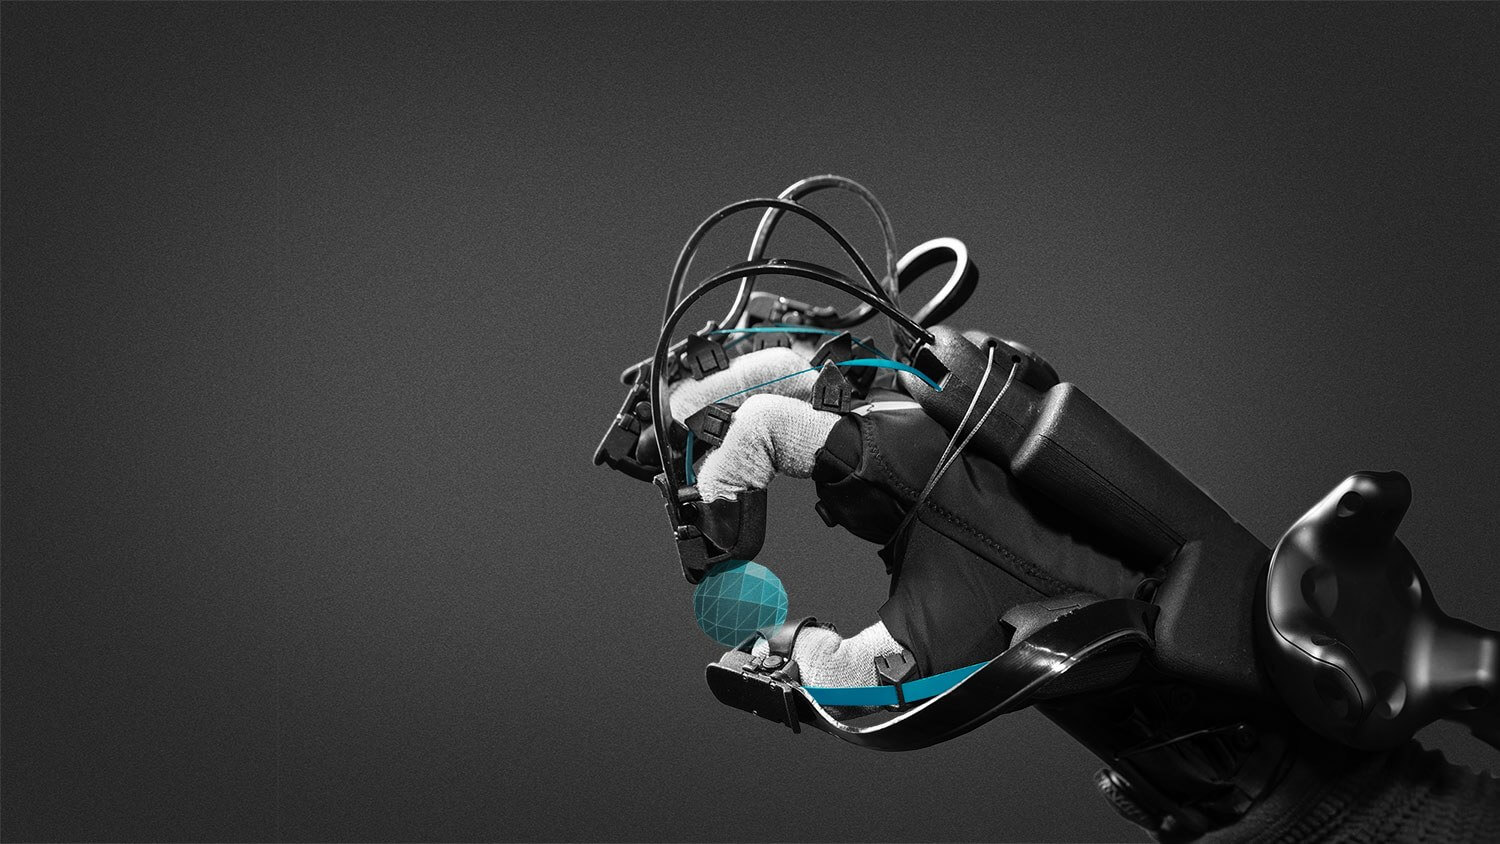 HaptX Gloves Development Kit bring haptics and force feedback to VR